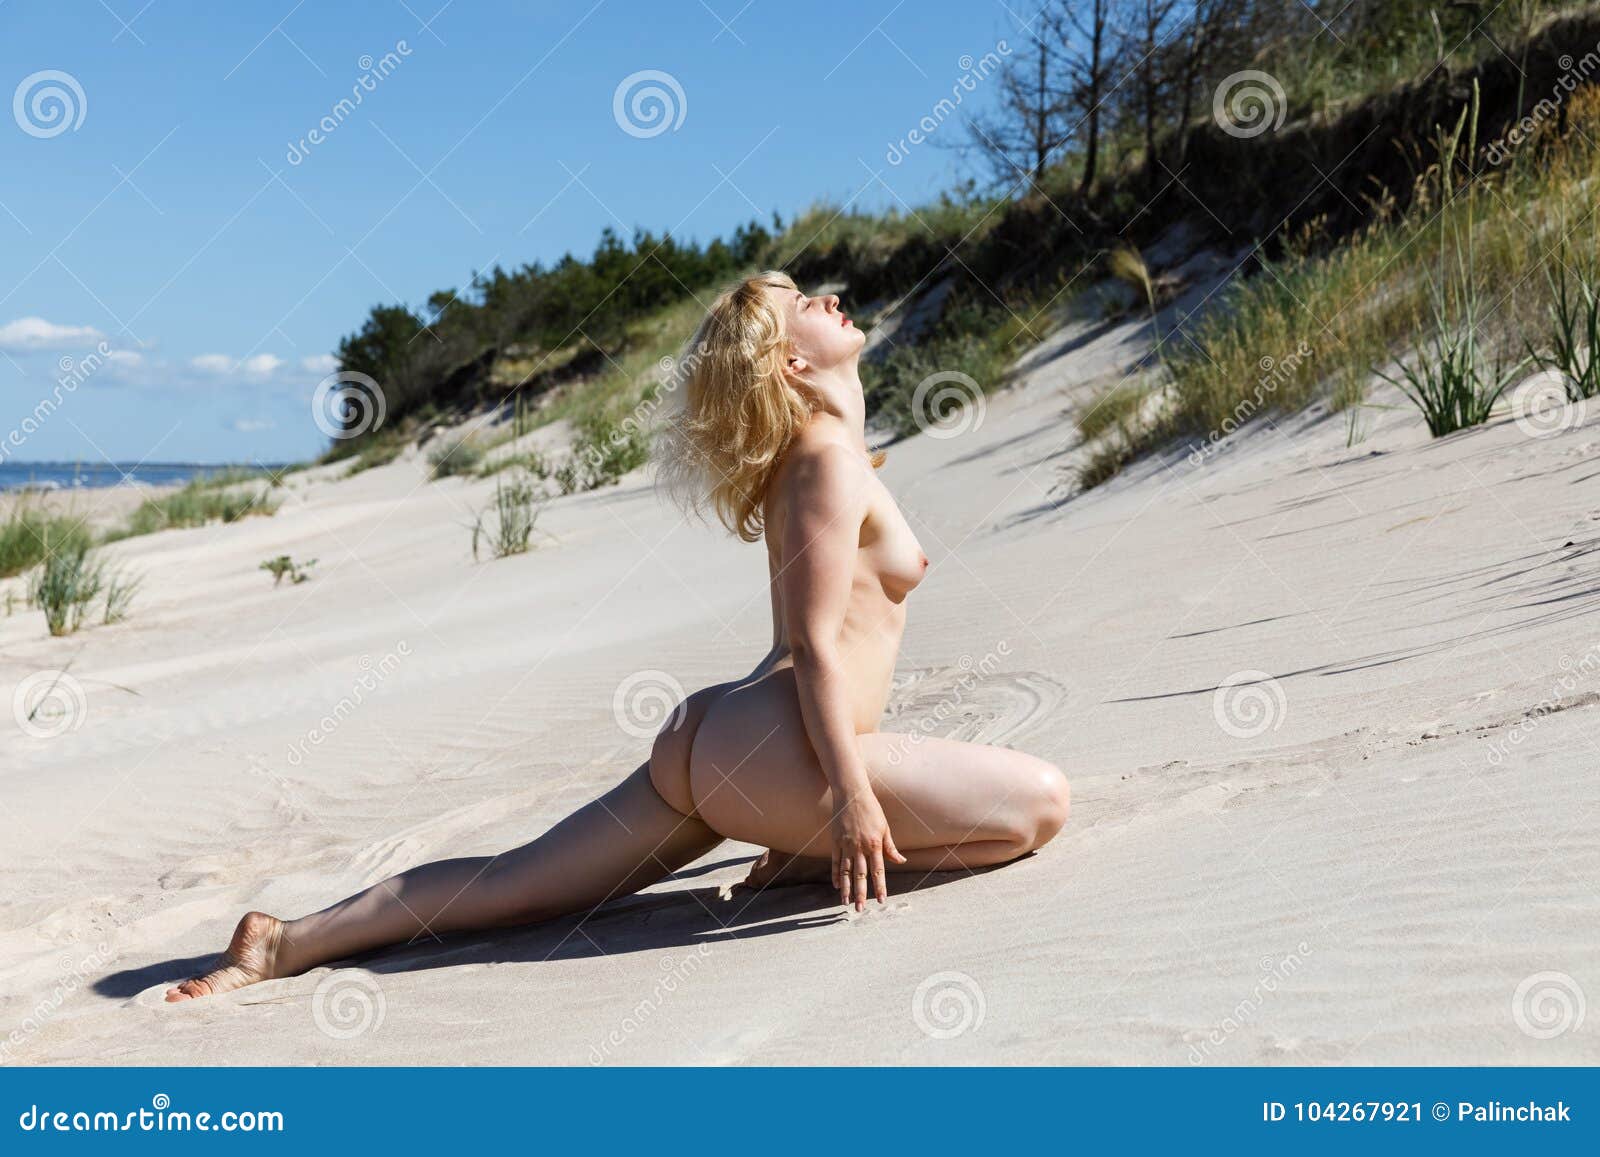 Long Beach Photo Gallery Naked - Beautiful Nude Girl Enjoying Nature Stock Image - Image of ...